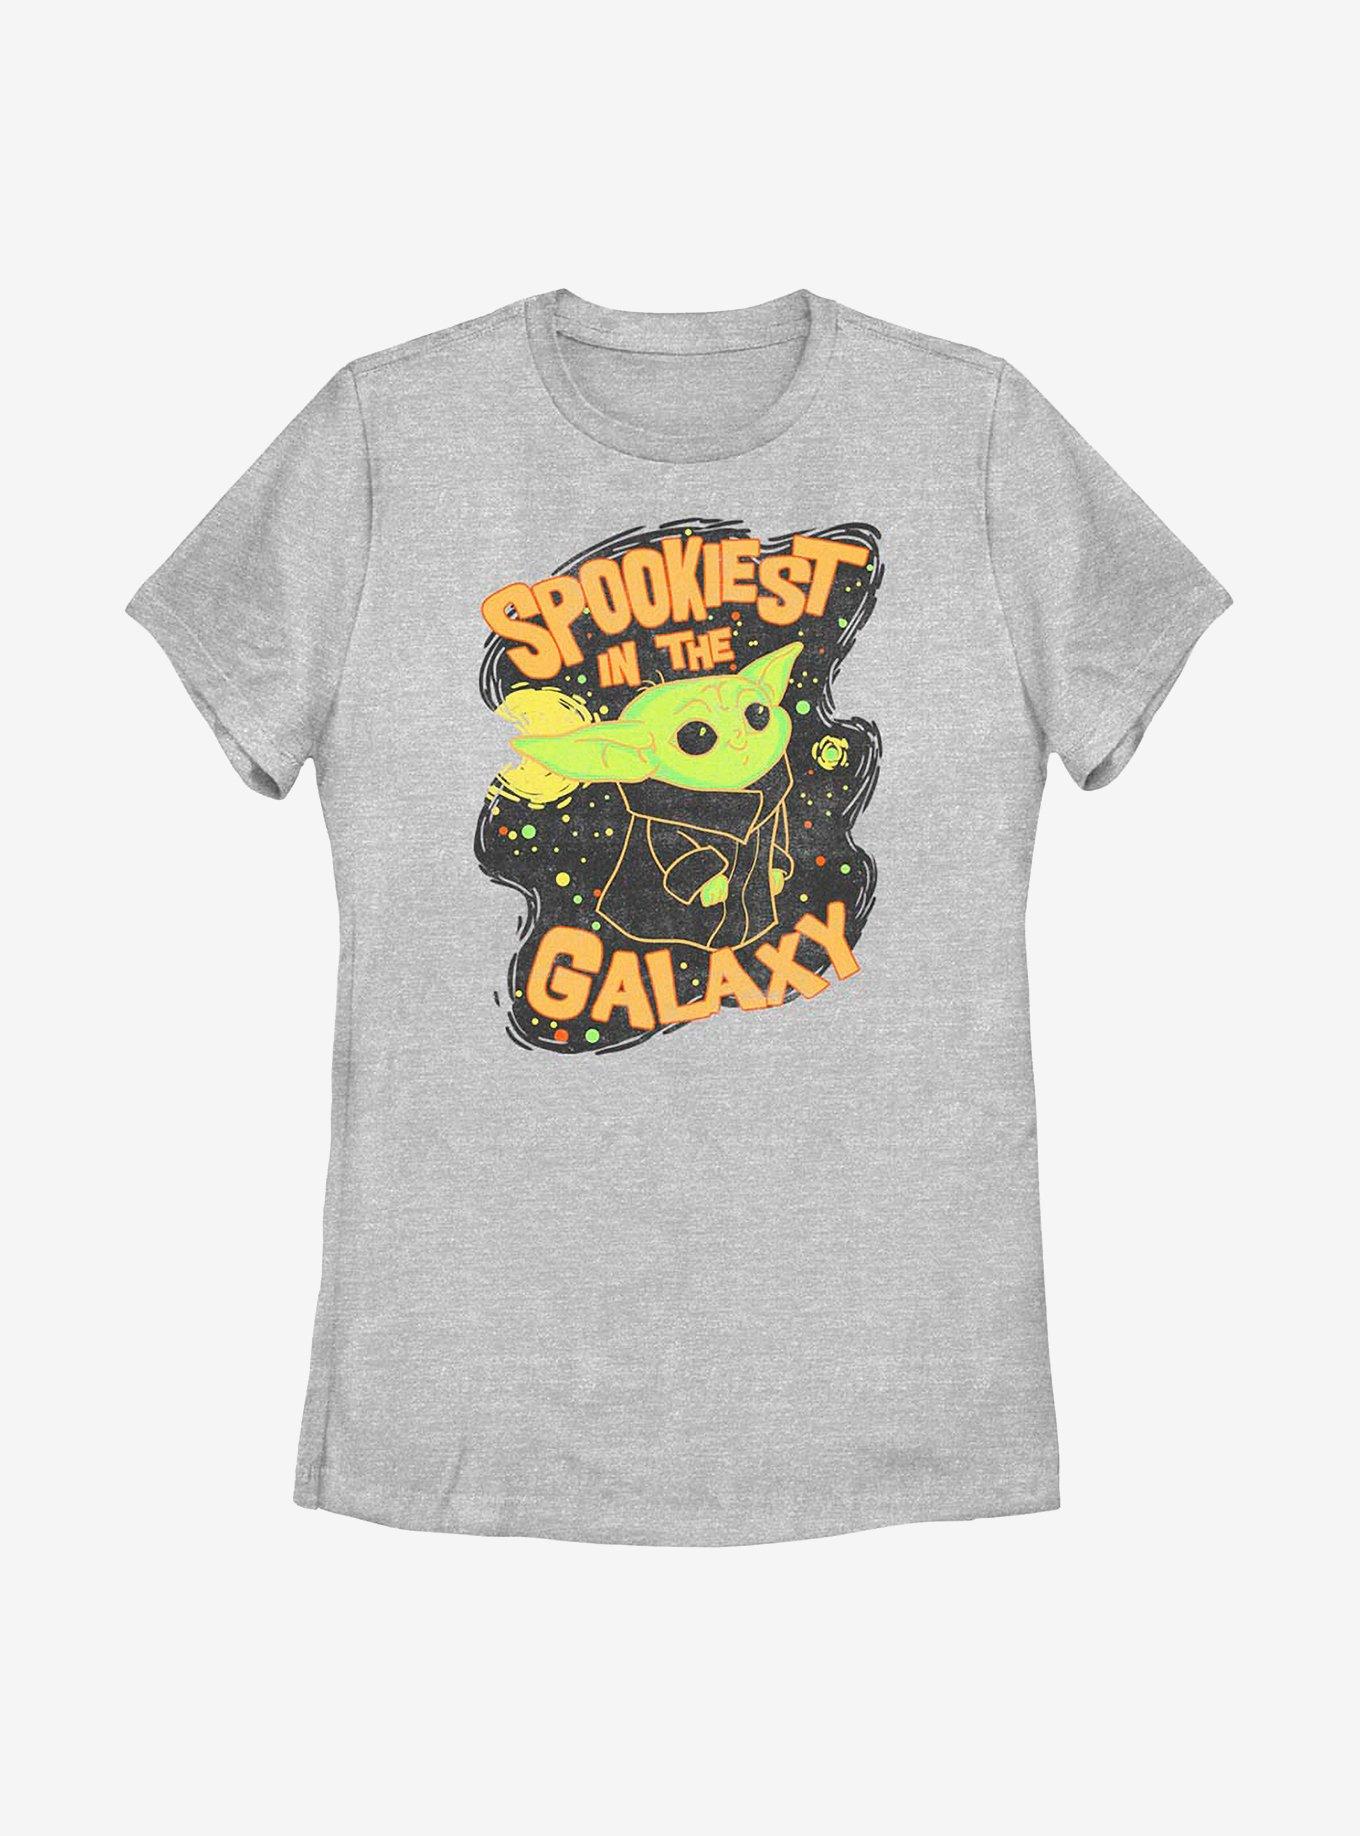 Star Wars The Mandalorian Spookiest in the Galaxy Womens T-Shirt, ATH HTR, hi-res